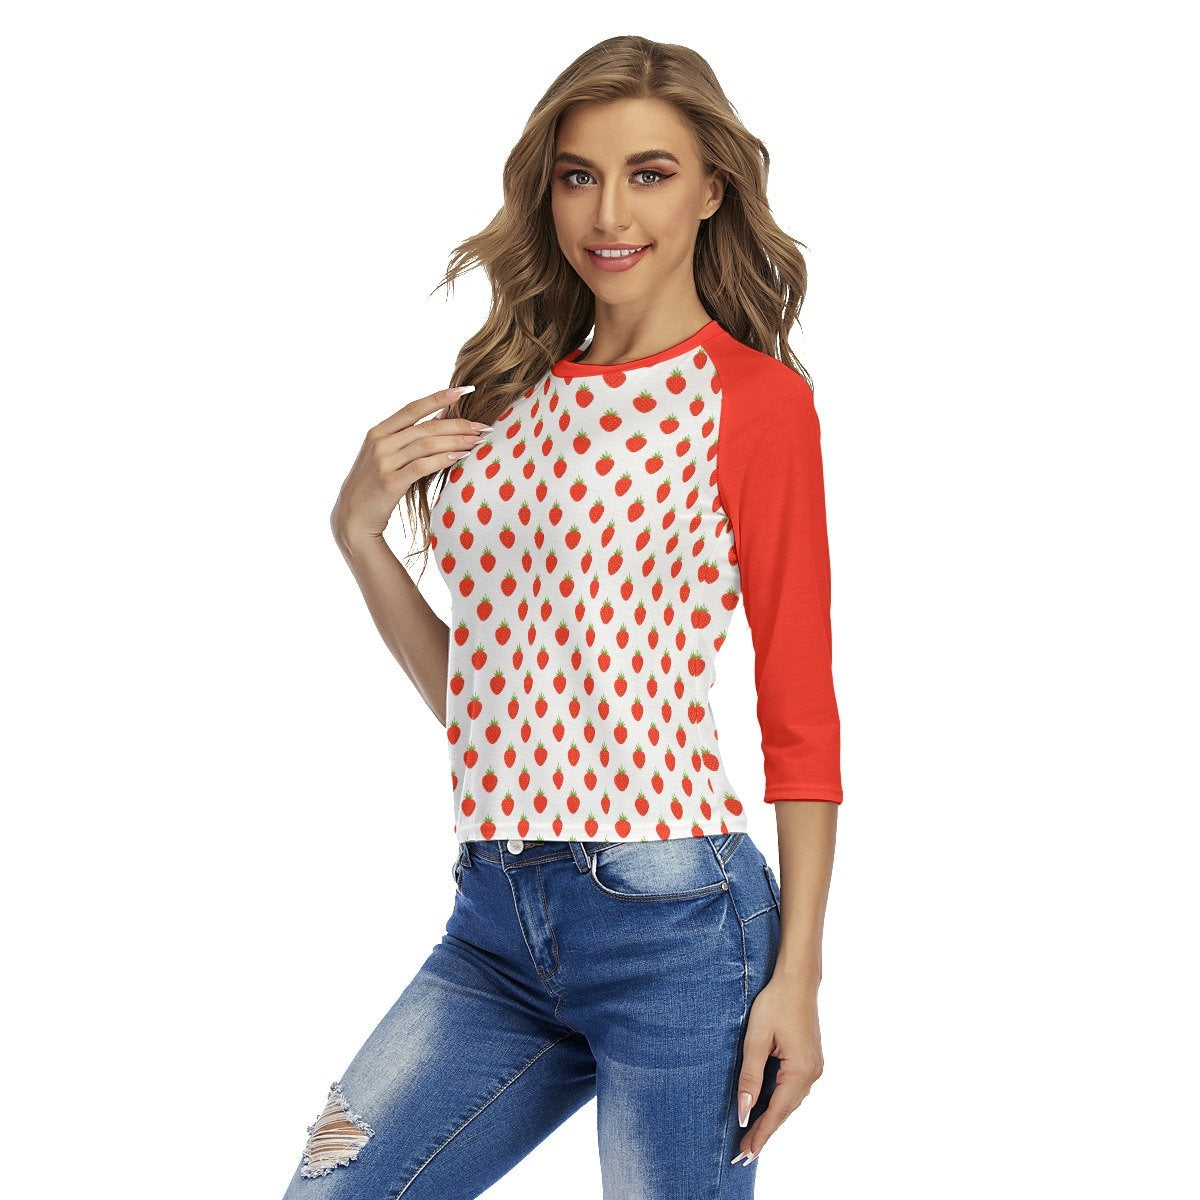 Erdbeer-Top, Retro-Raglan-Shirt, Raglan-T-Shirt, Erdbeer-Print-Top, rotes Raglan-Shirt, 80er-Jahre-inspiriertes Top, Raglan-Shirt für Damen, Baseball-Shirt